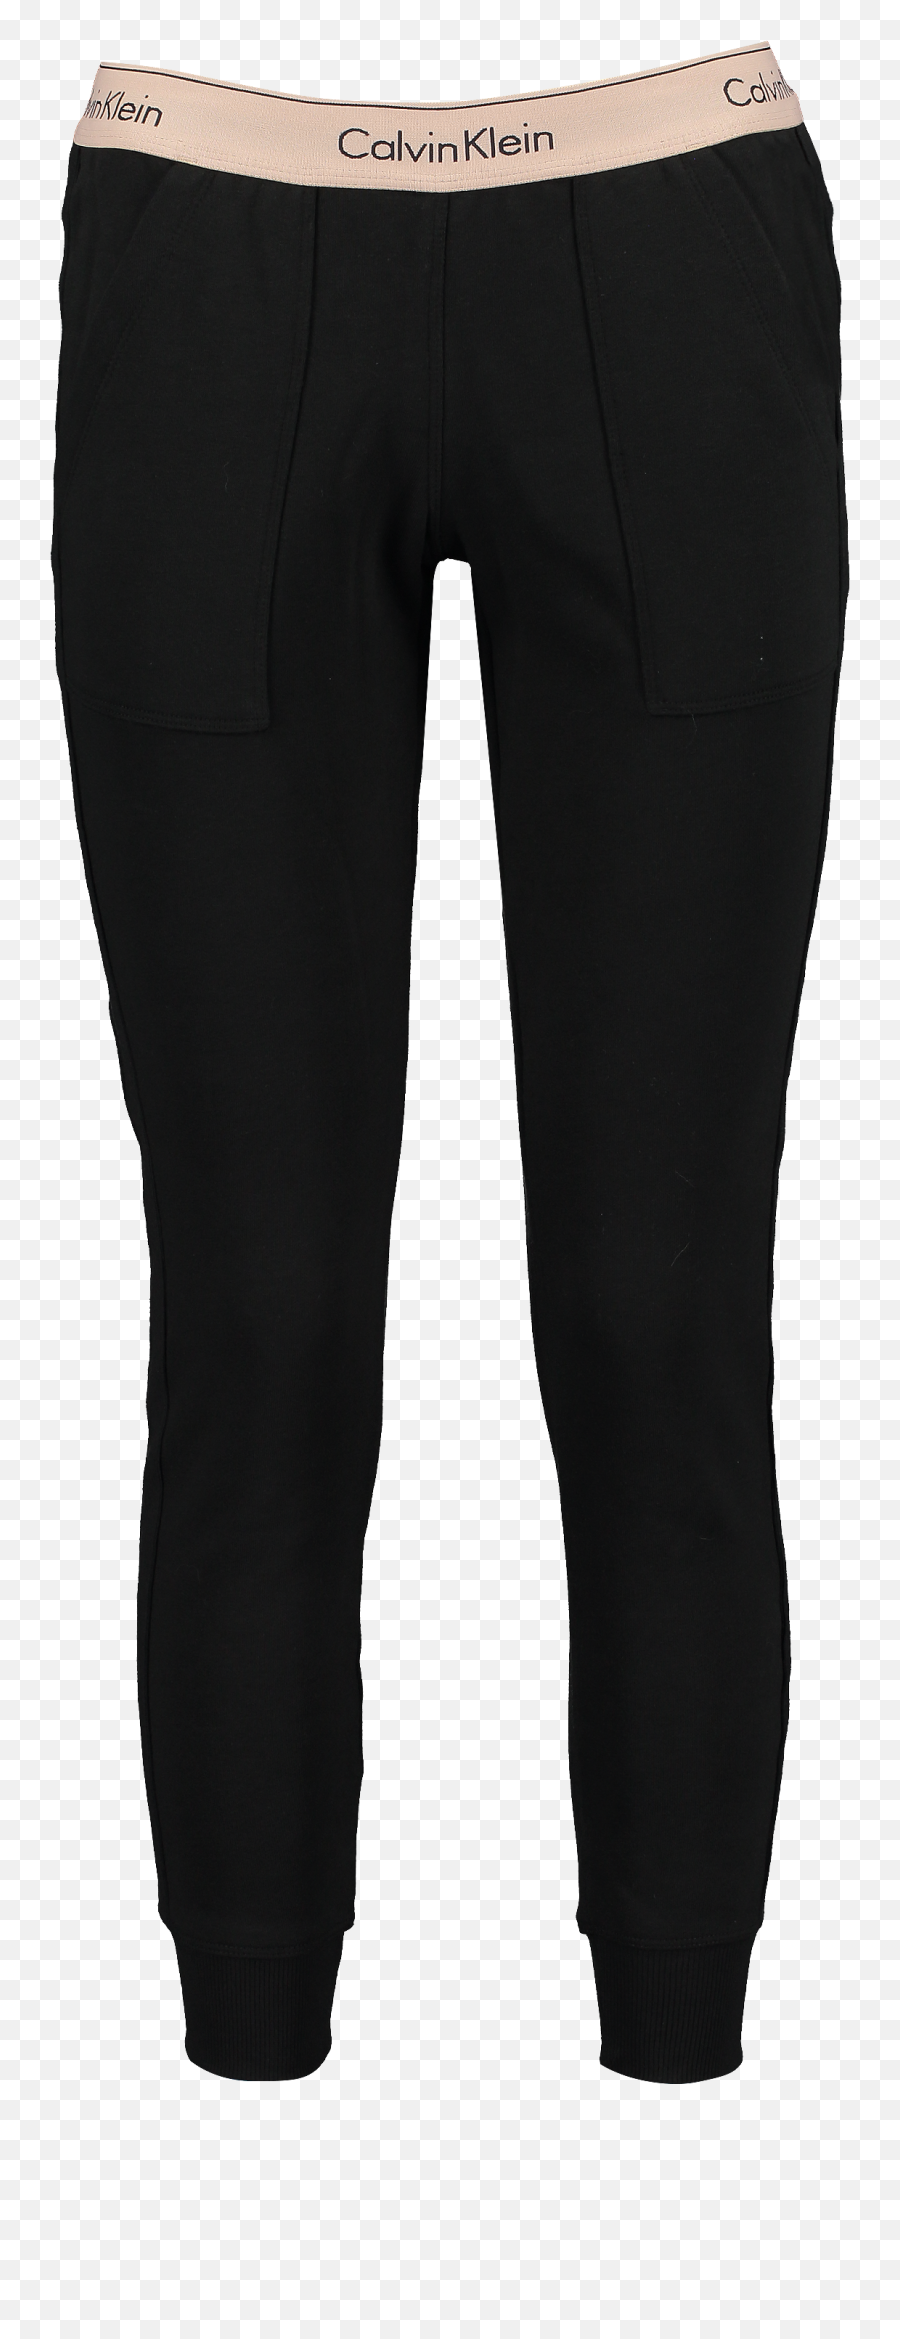 Calvin Klein Underwear - Sweatpants Emoji,Calvin Klein Logo Legging